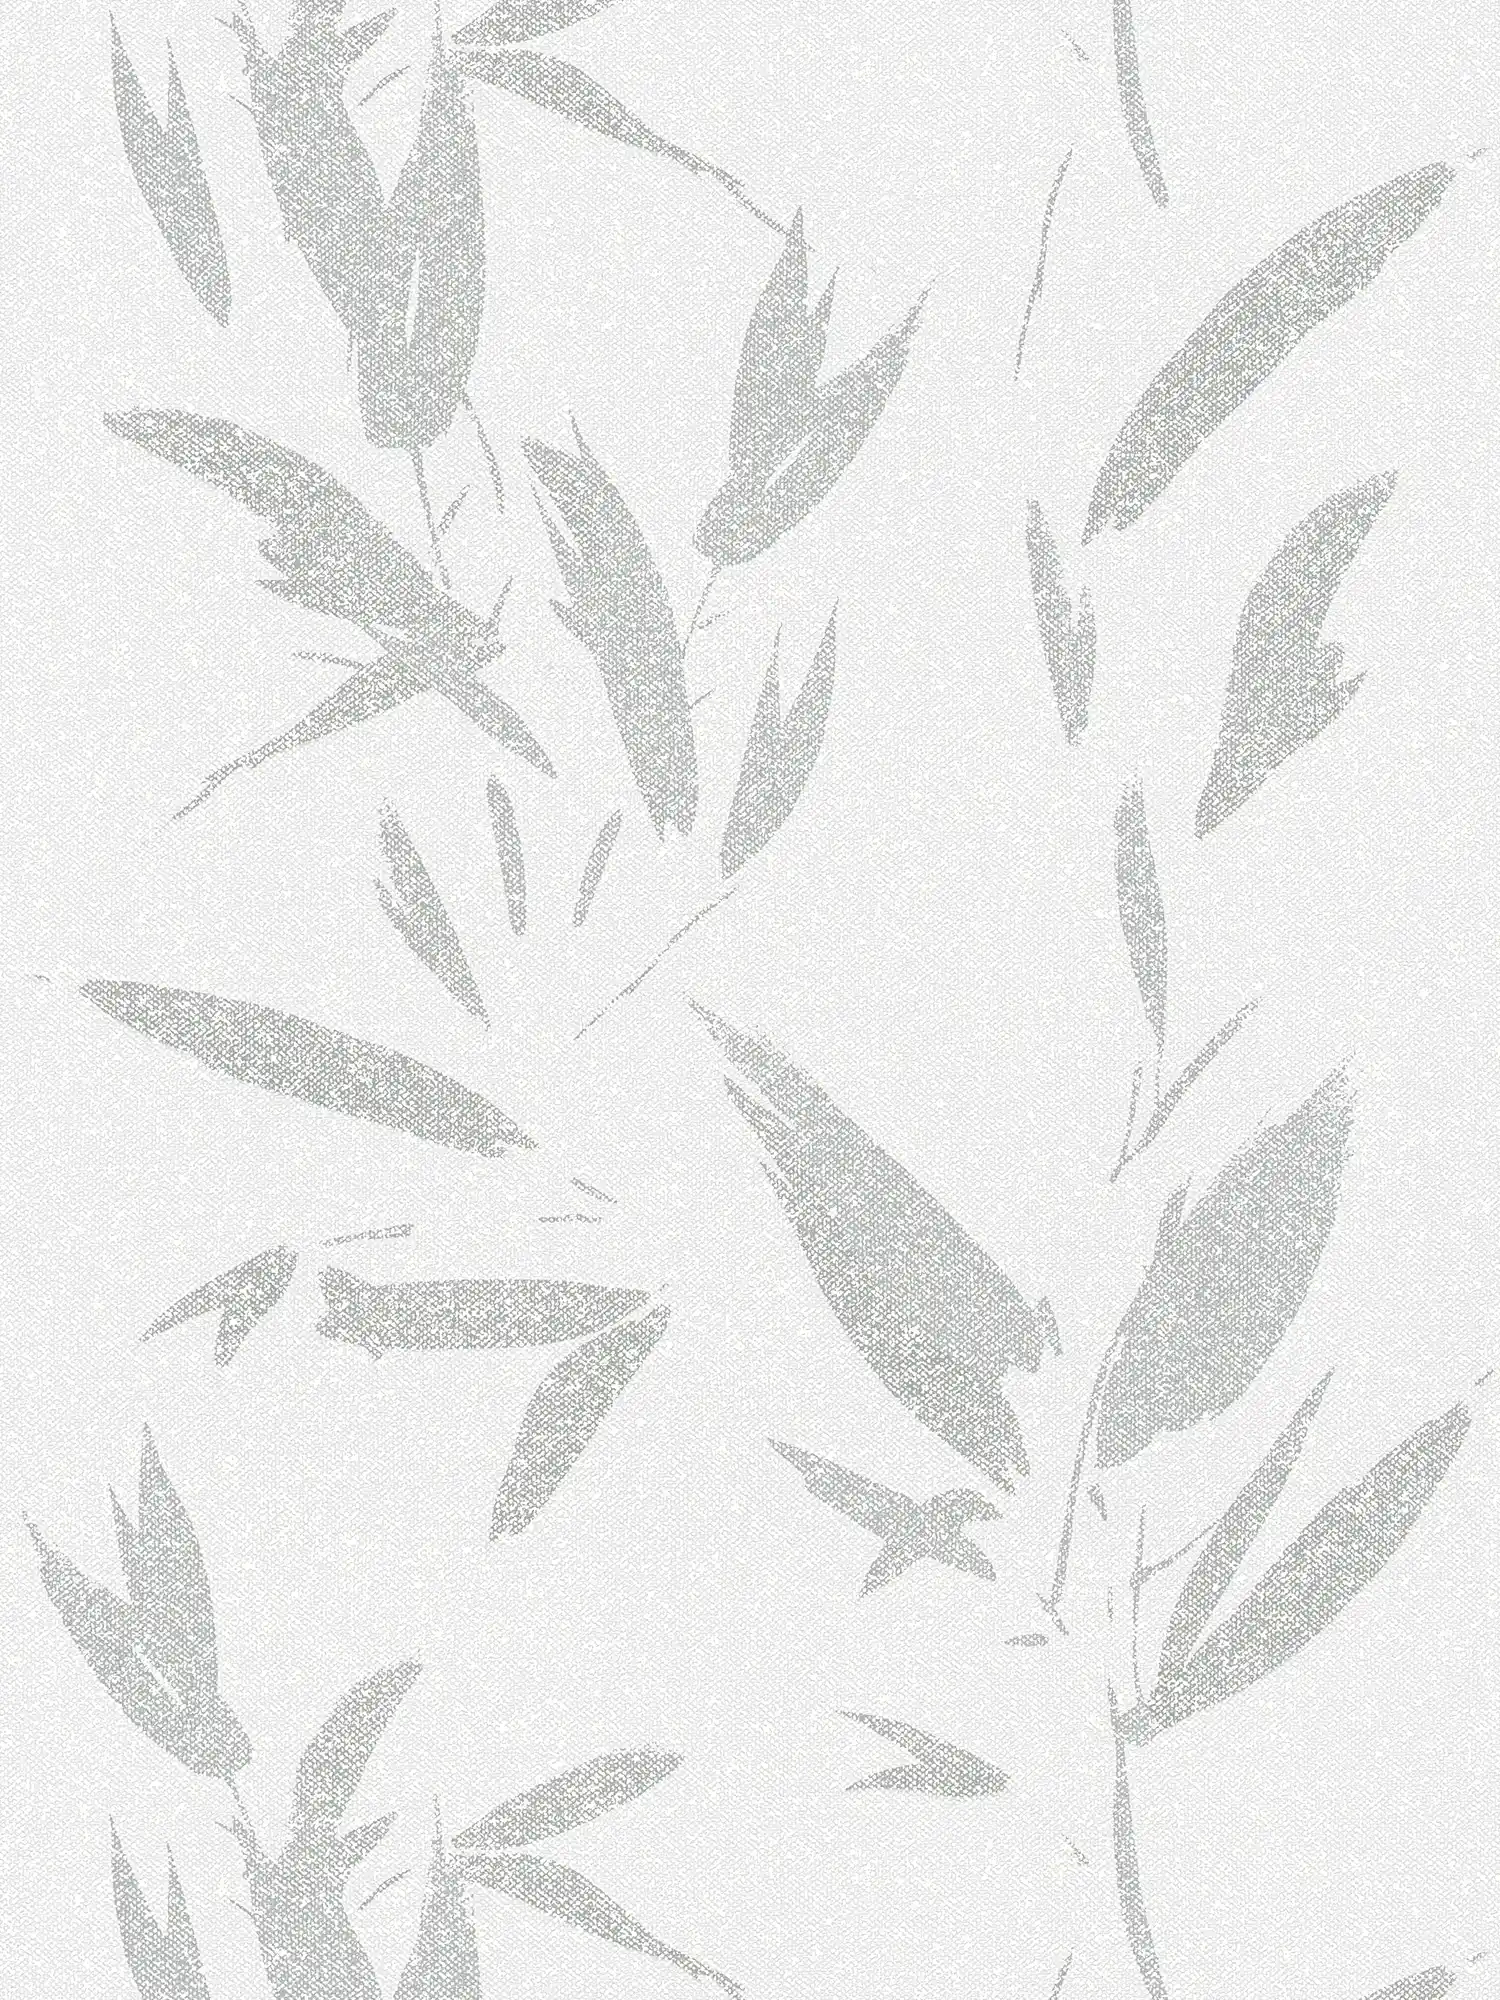 Vliestapete Blättermotiv abstrakt, Textiloptik – Weiß, Creme, Grau
